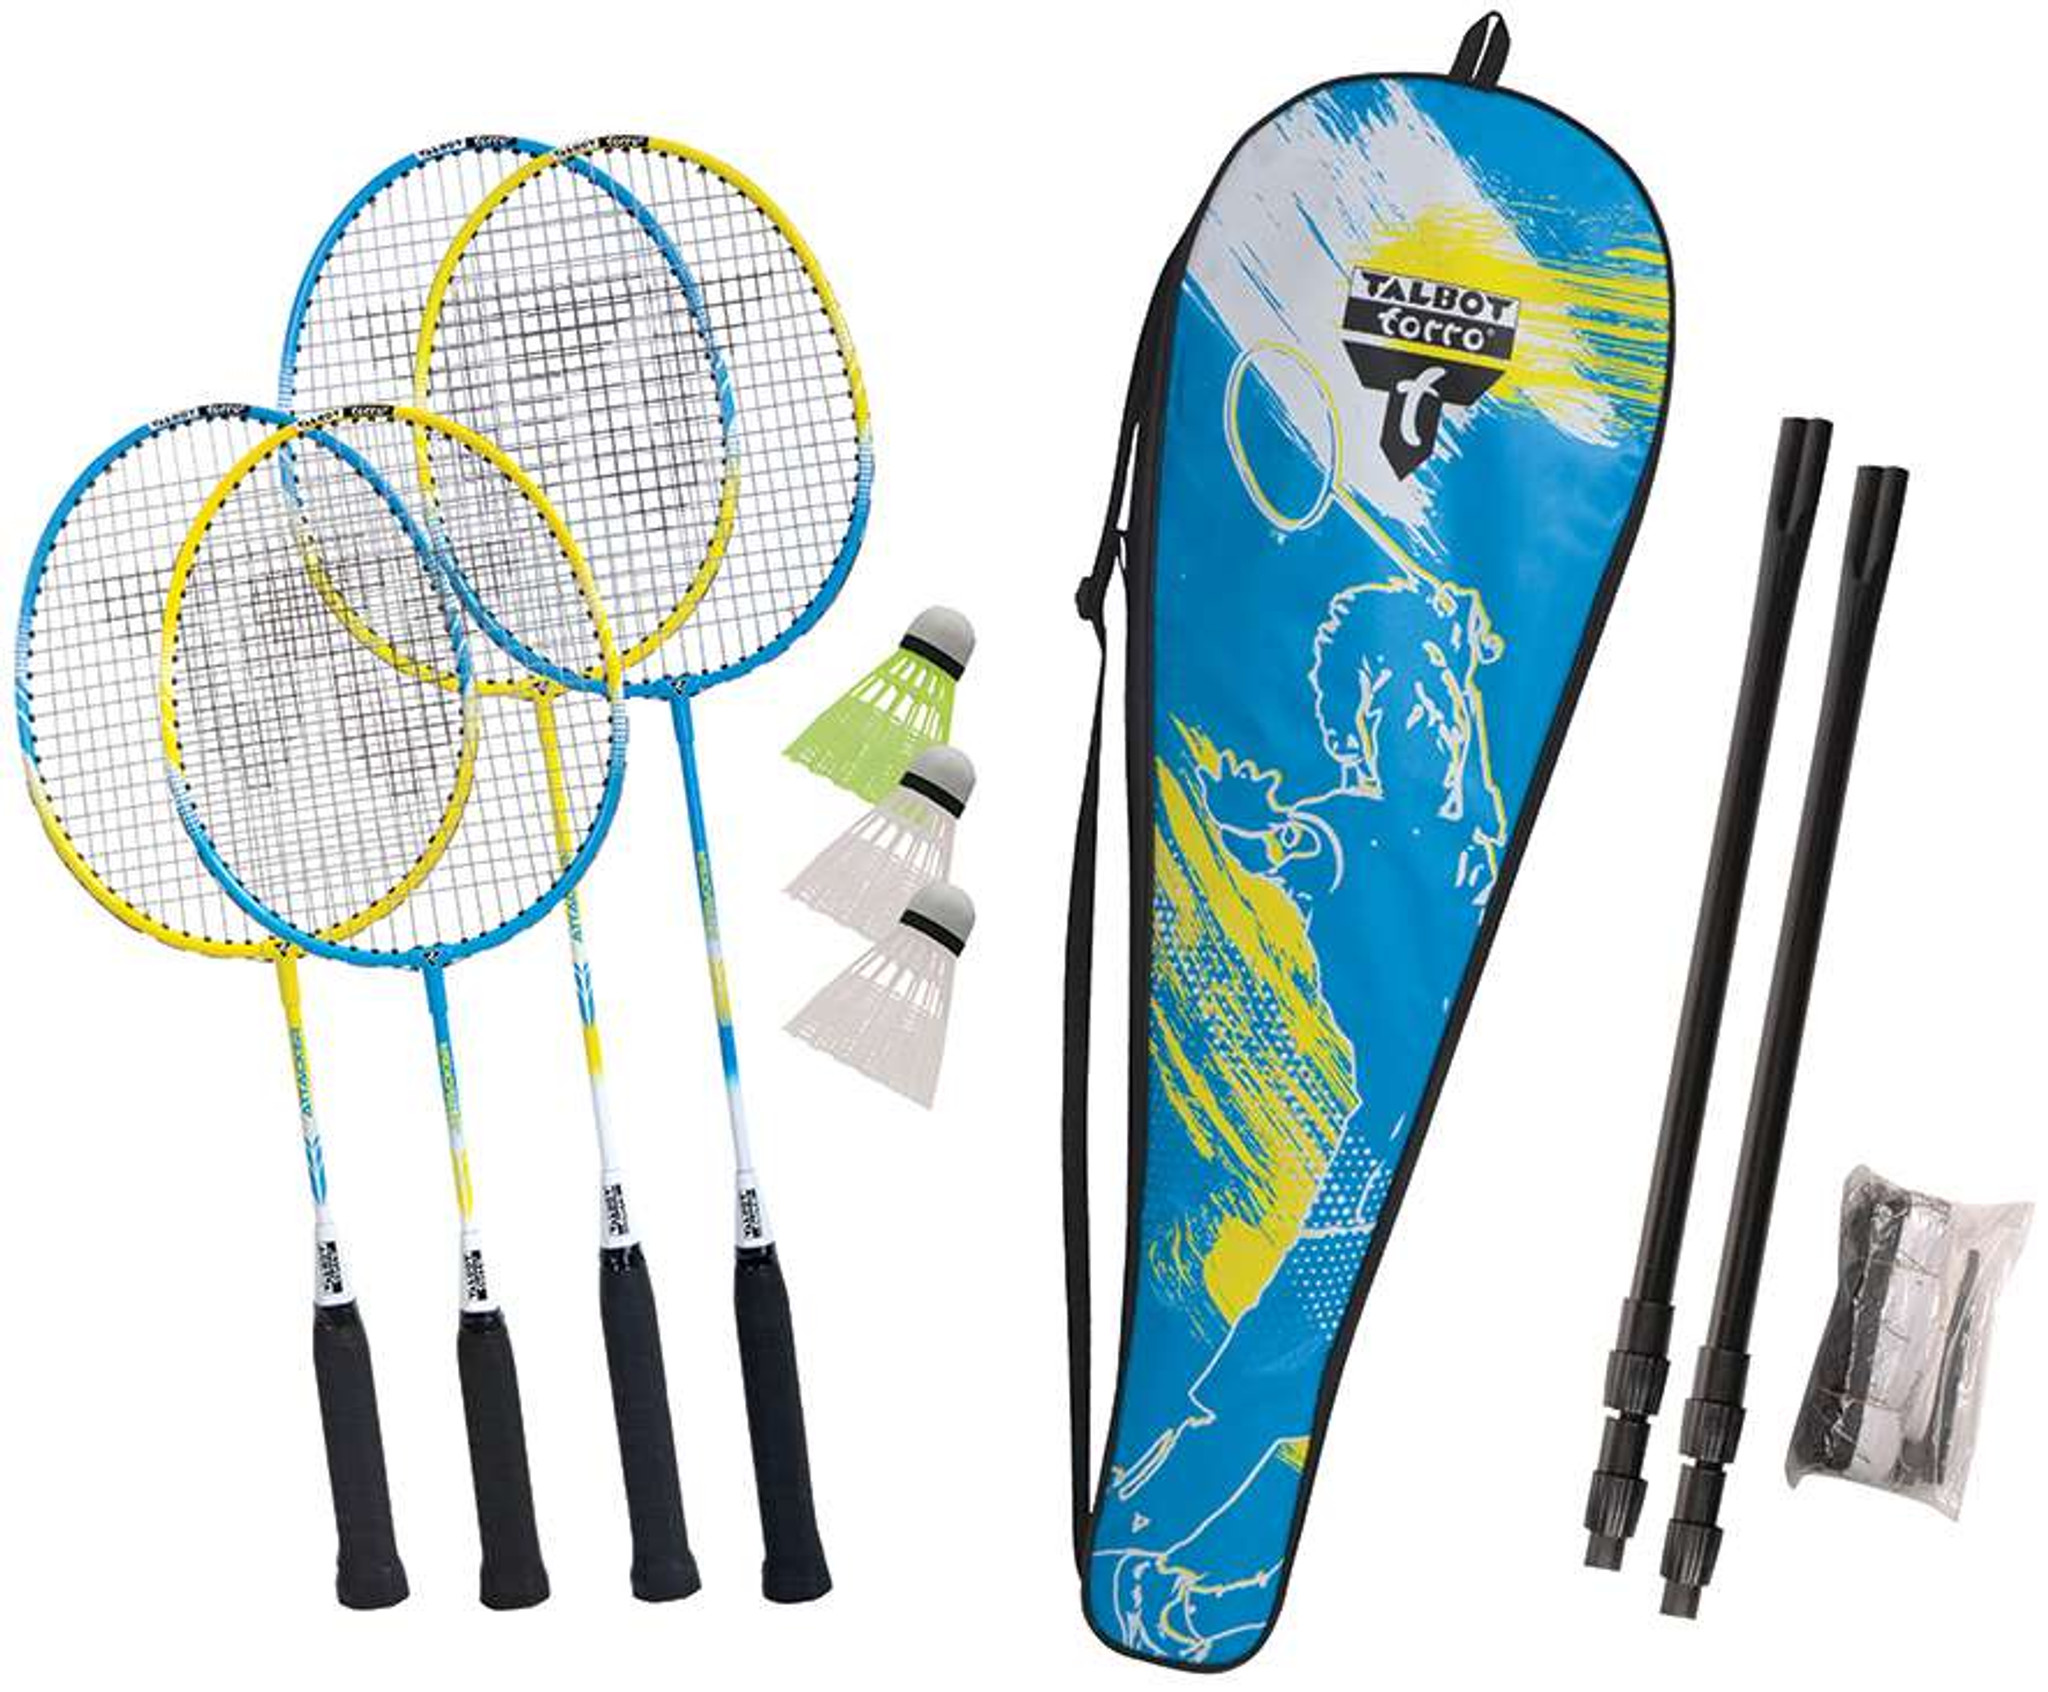 Schildkröt Outdoor Badminton Family Set New - Winter Wonders - Save 52% -  Ping-Pong Depot